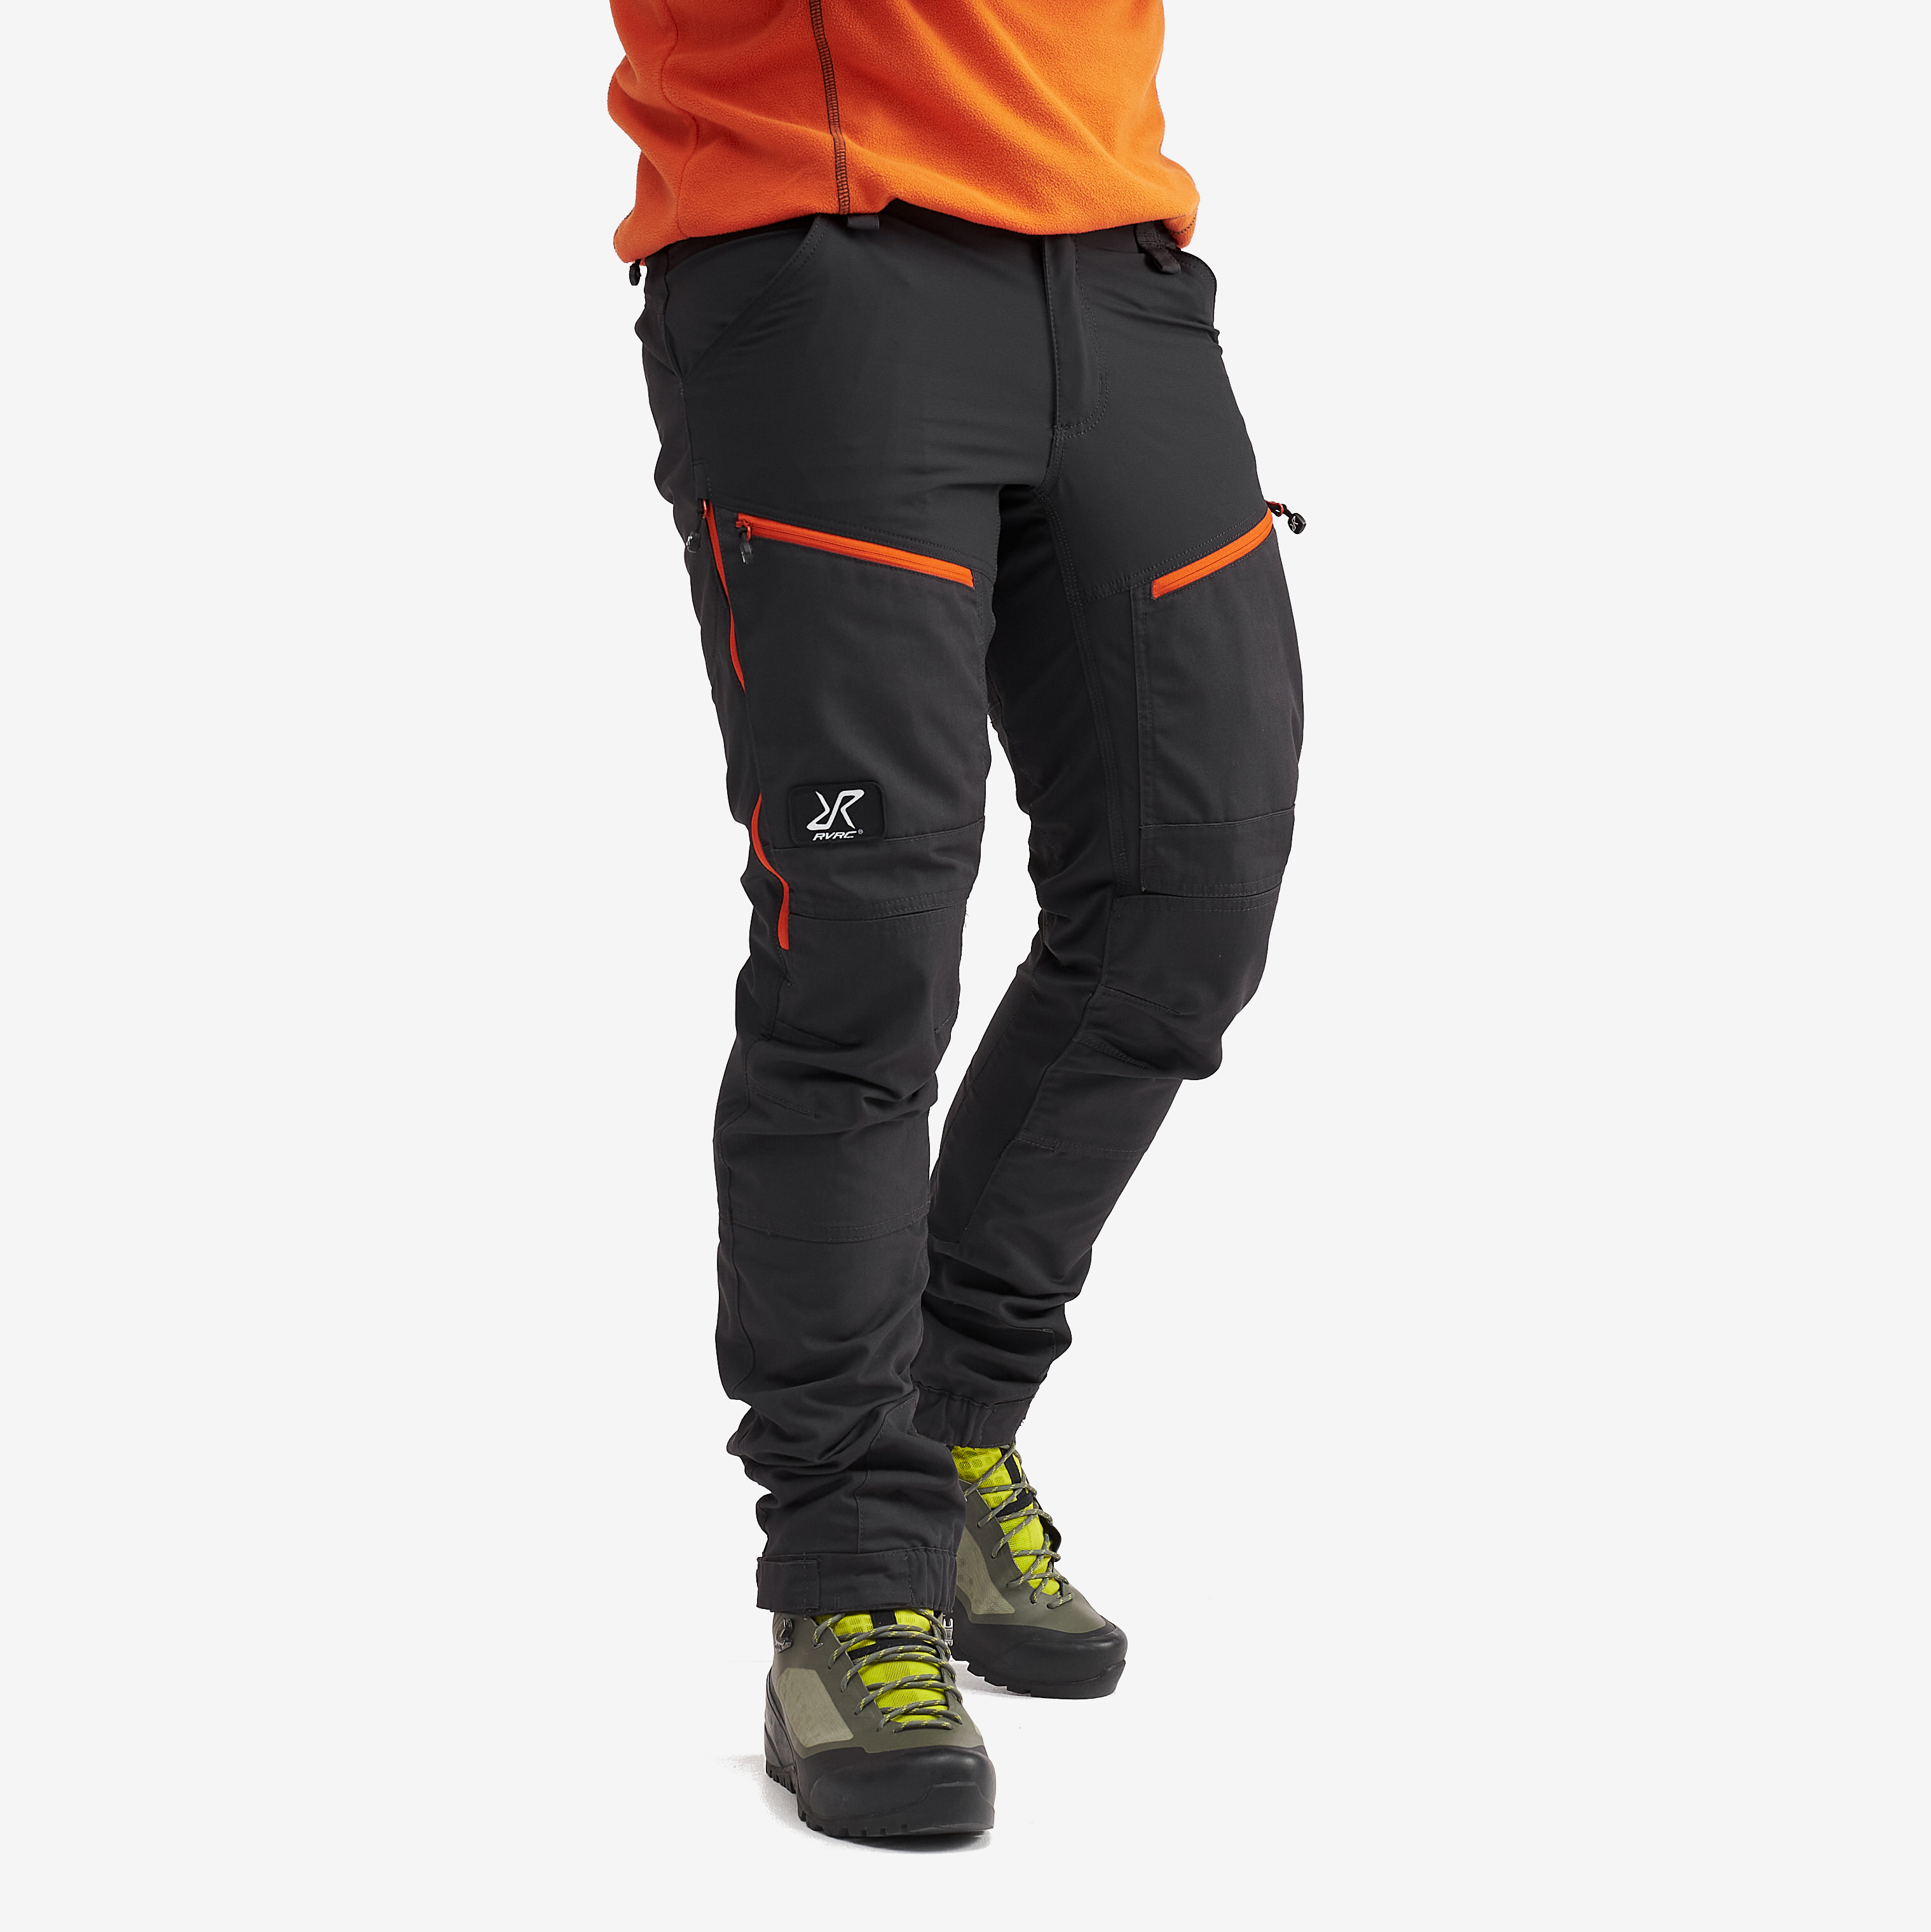 RVRC GP Pro Trousers Grey/Orange Men